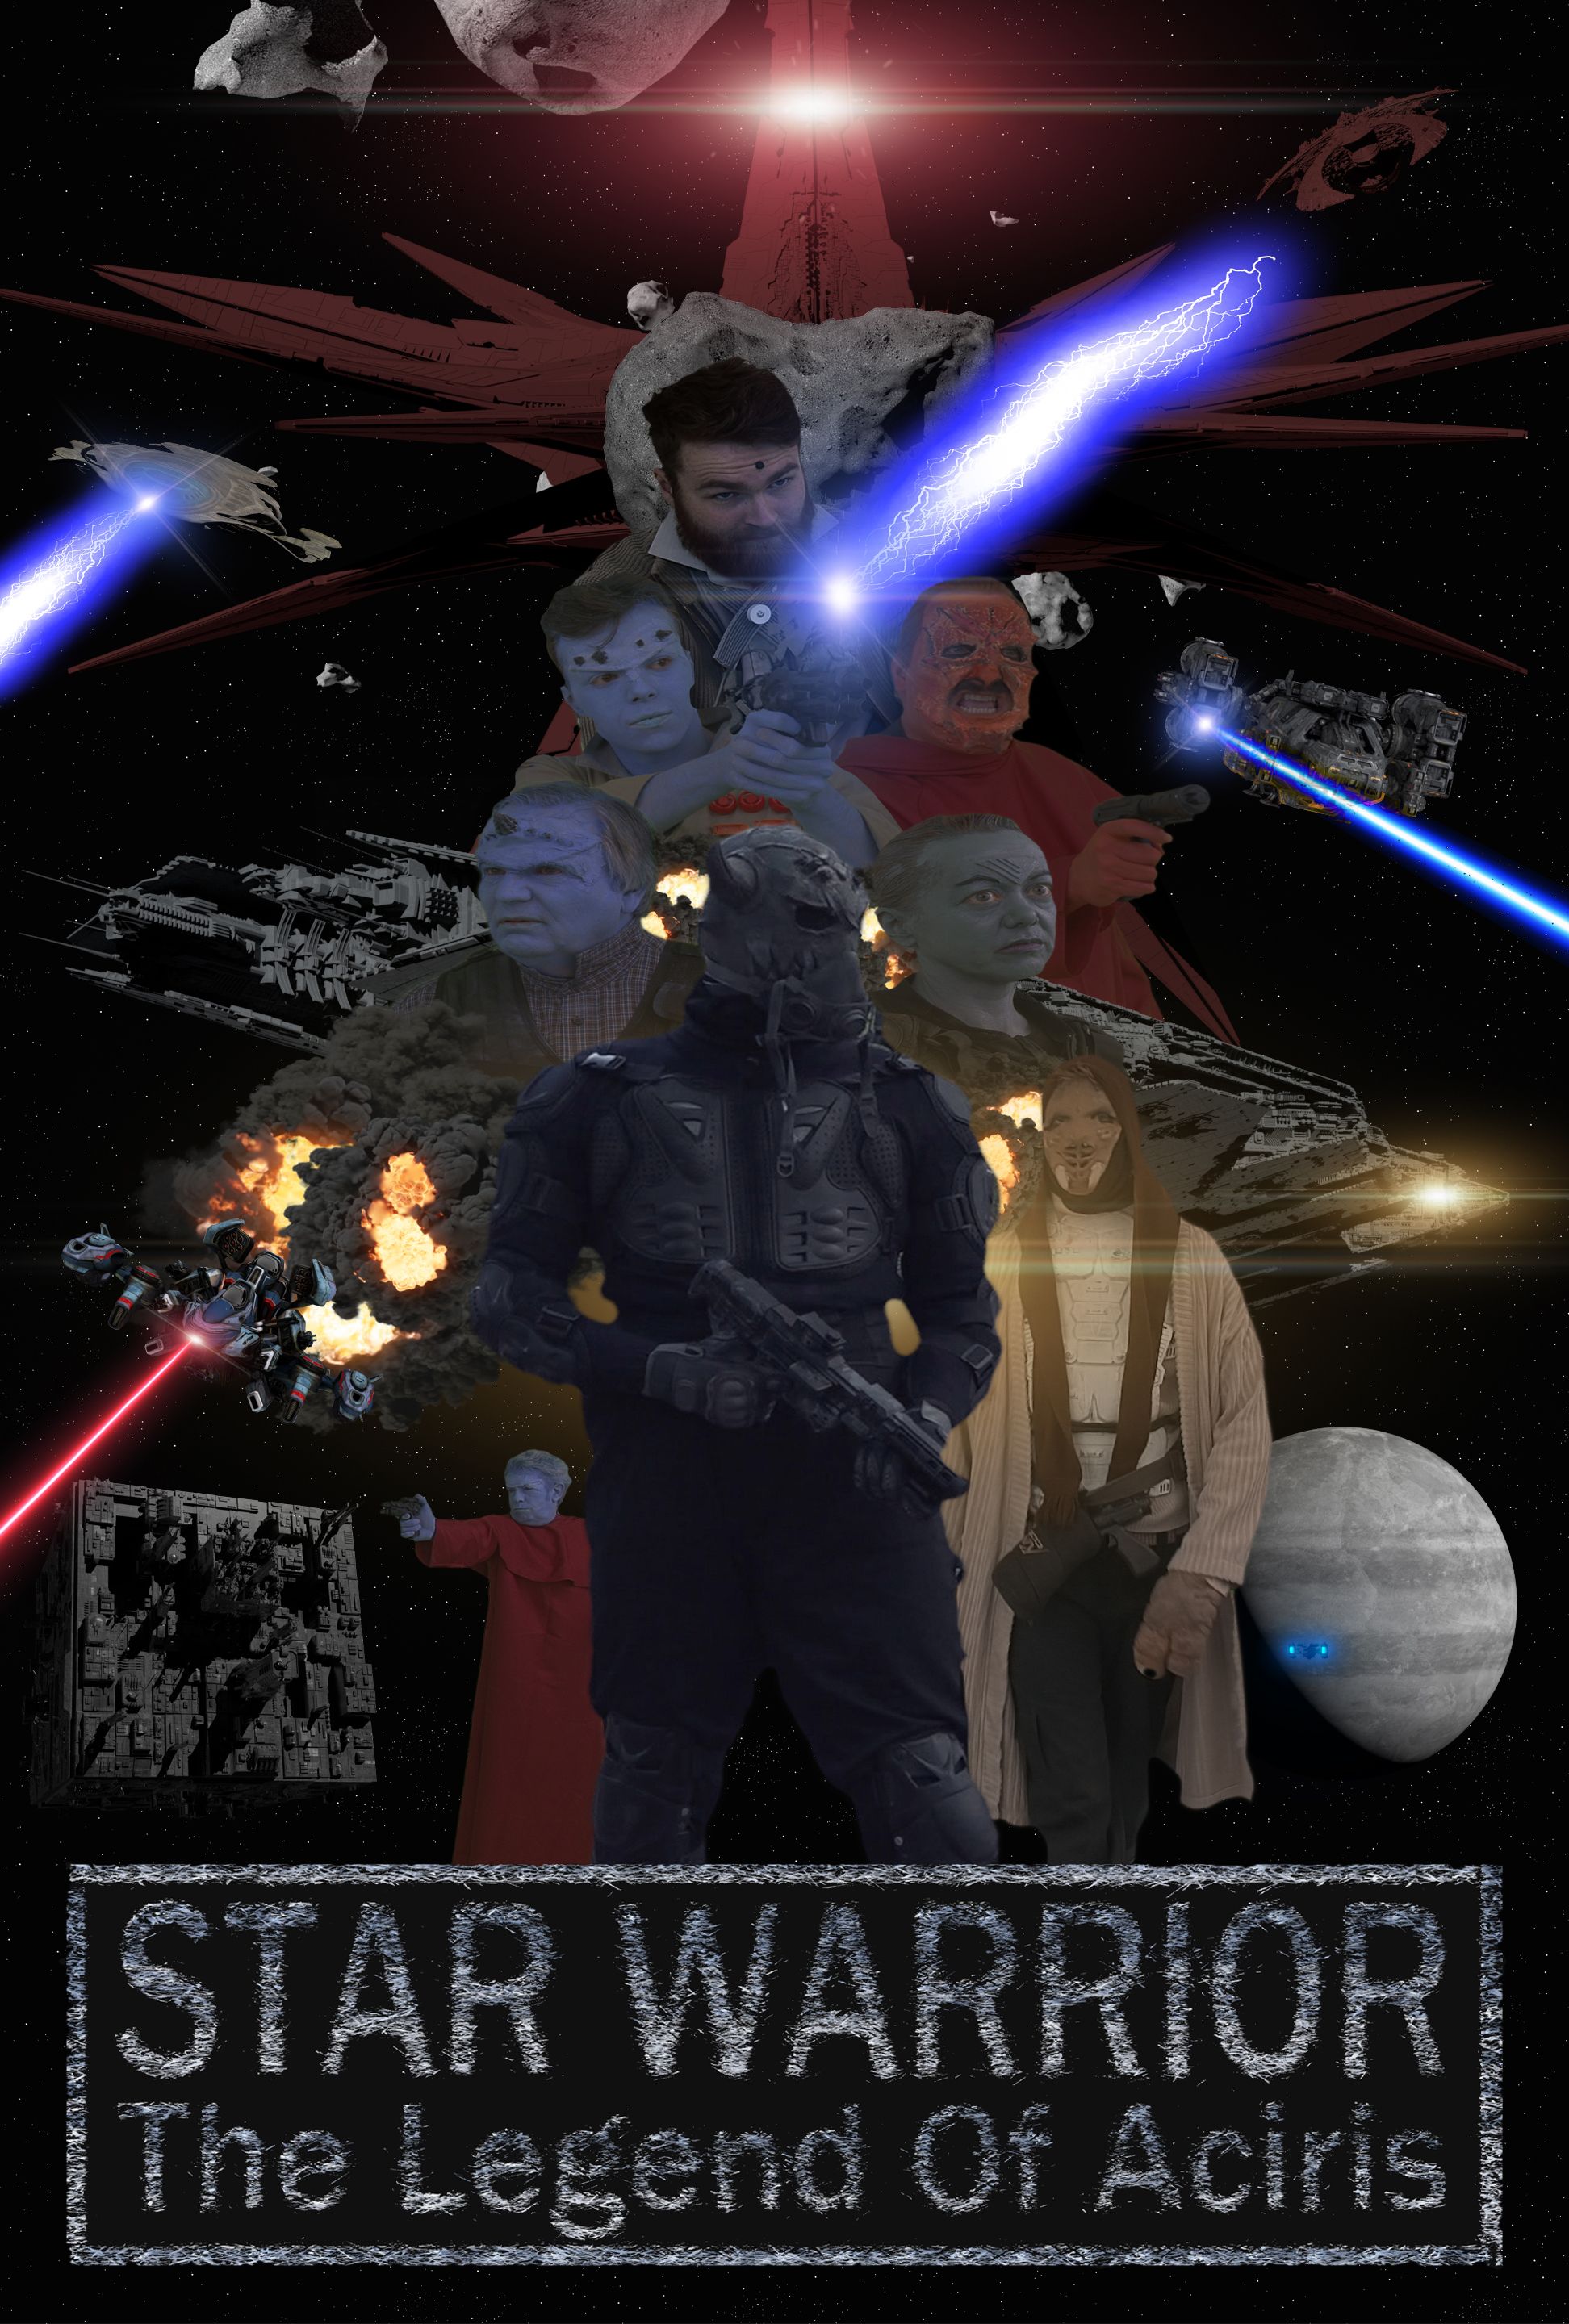 Star Warrior - The Legend of Aciris (2021) Tamil [Voice Over] Dubbed WEBRip download full movie